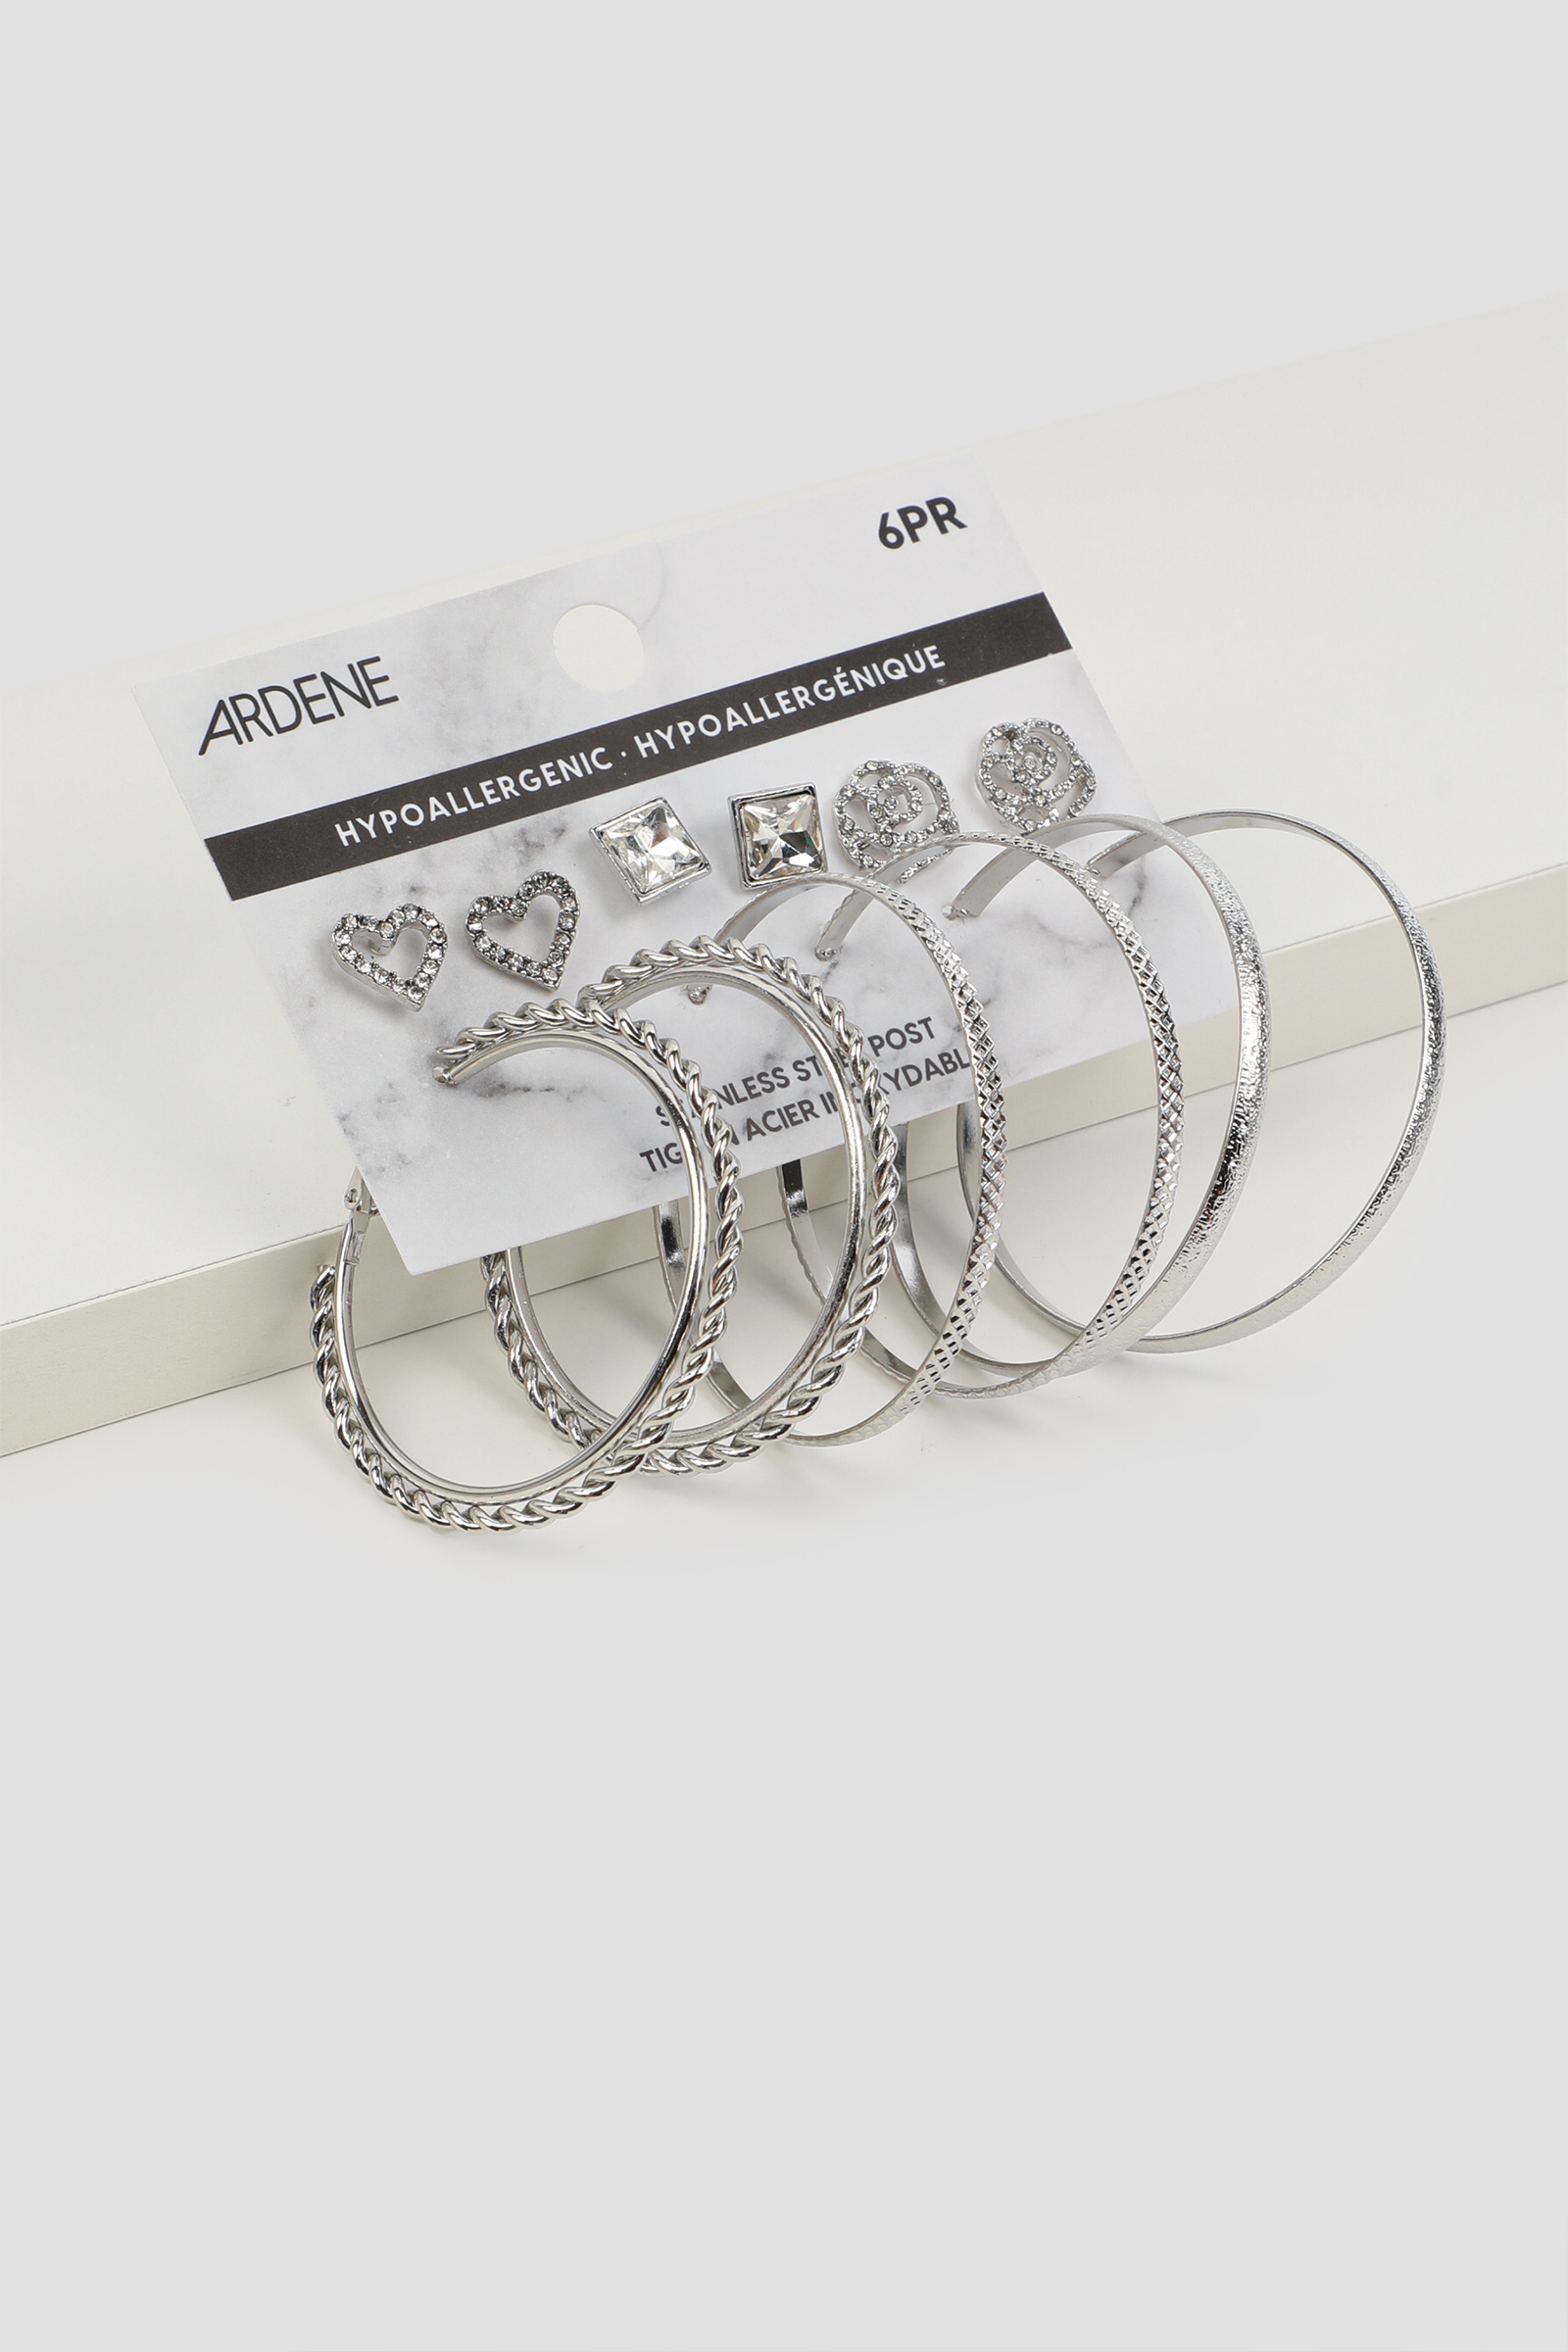 Ardene 6-Pack of Heart & Flower Earrings in Silver | Stainless Steel